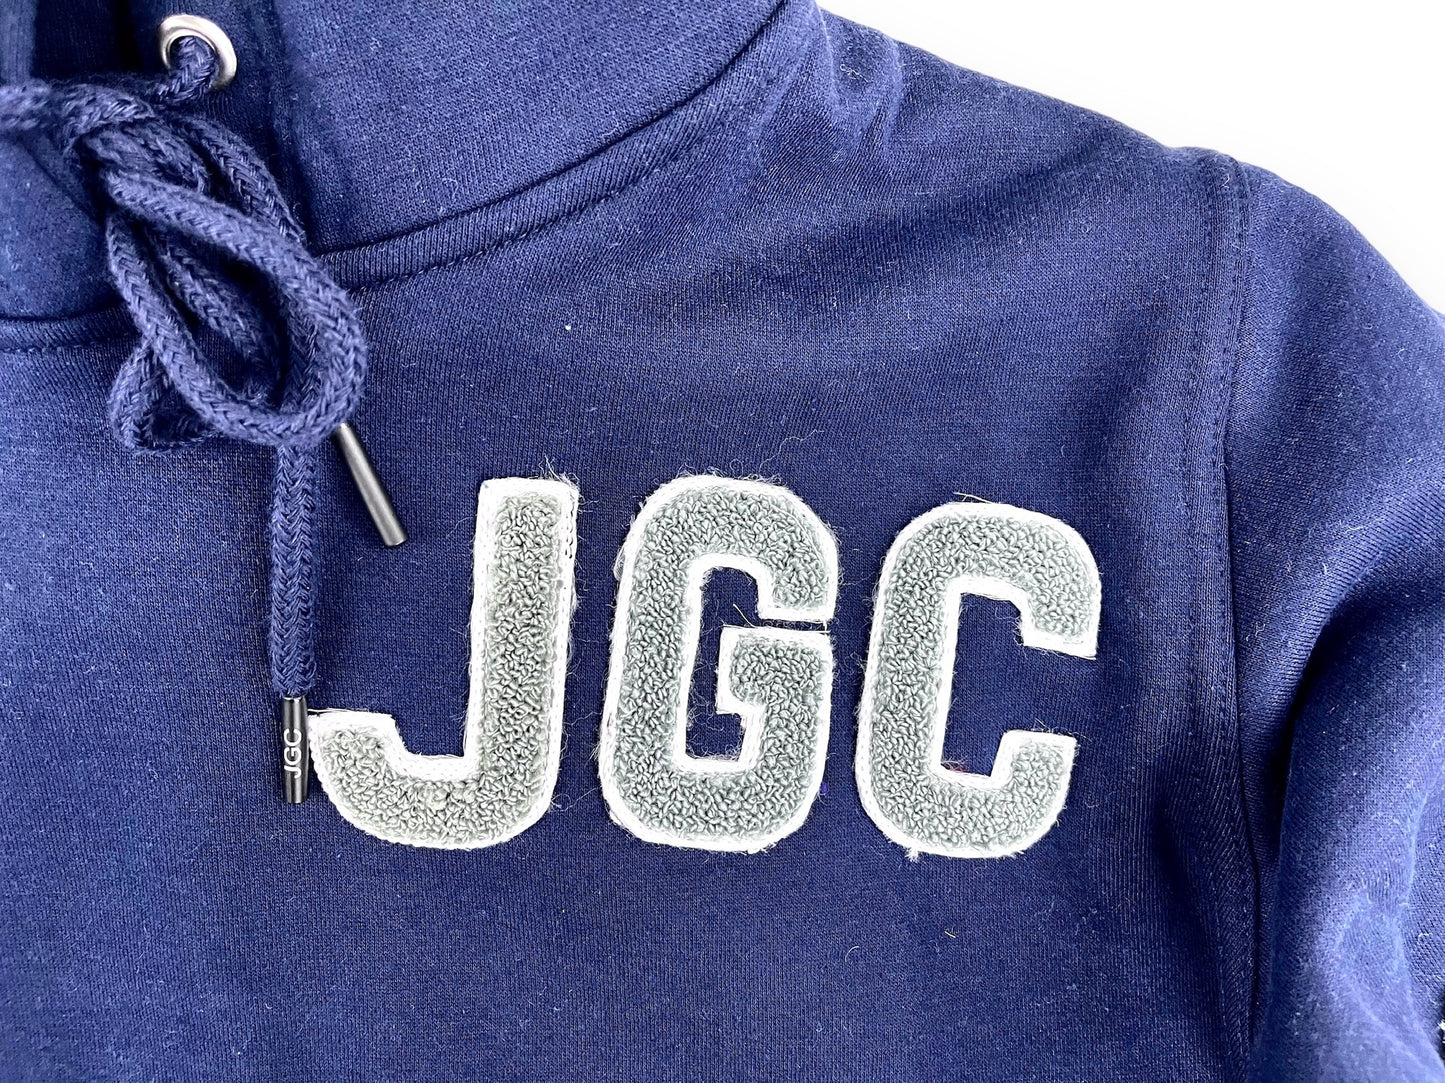 Jon Geda Pullover Sweatsuit (Navy Blue)